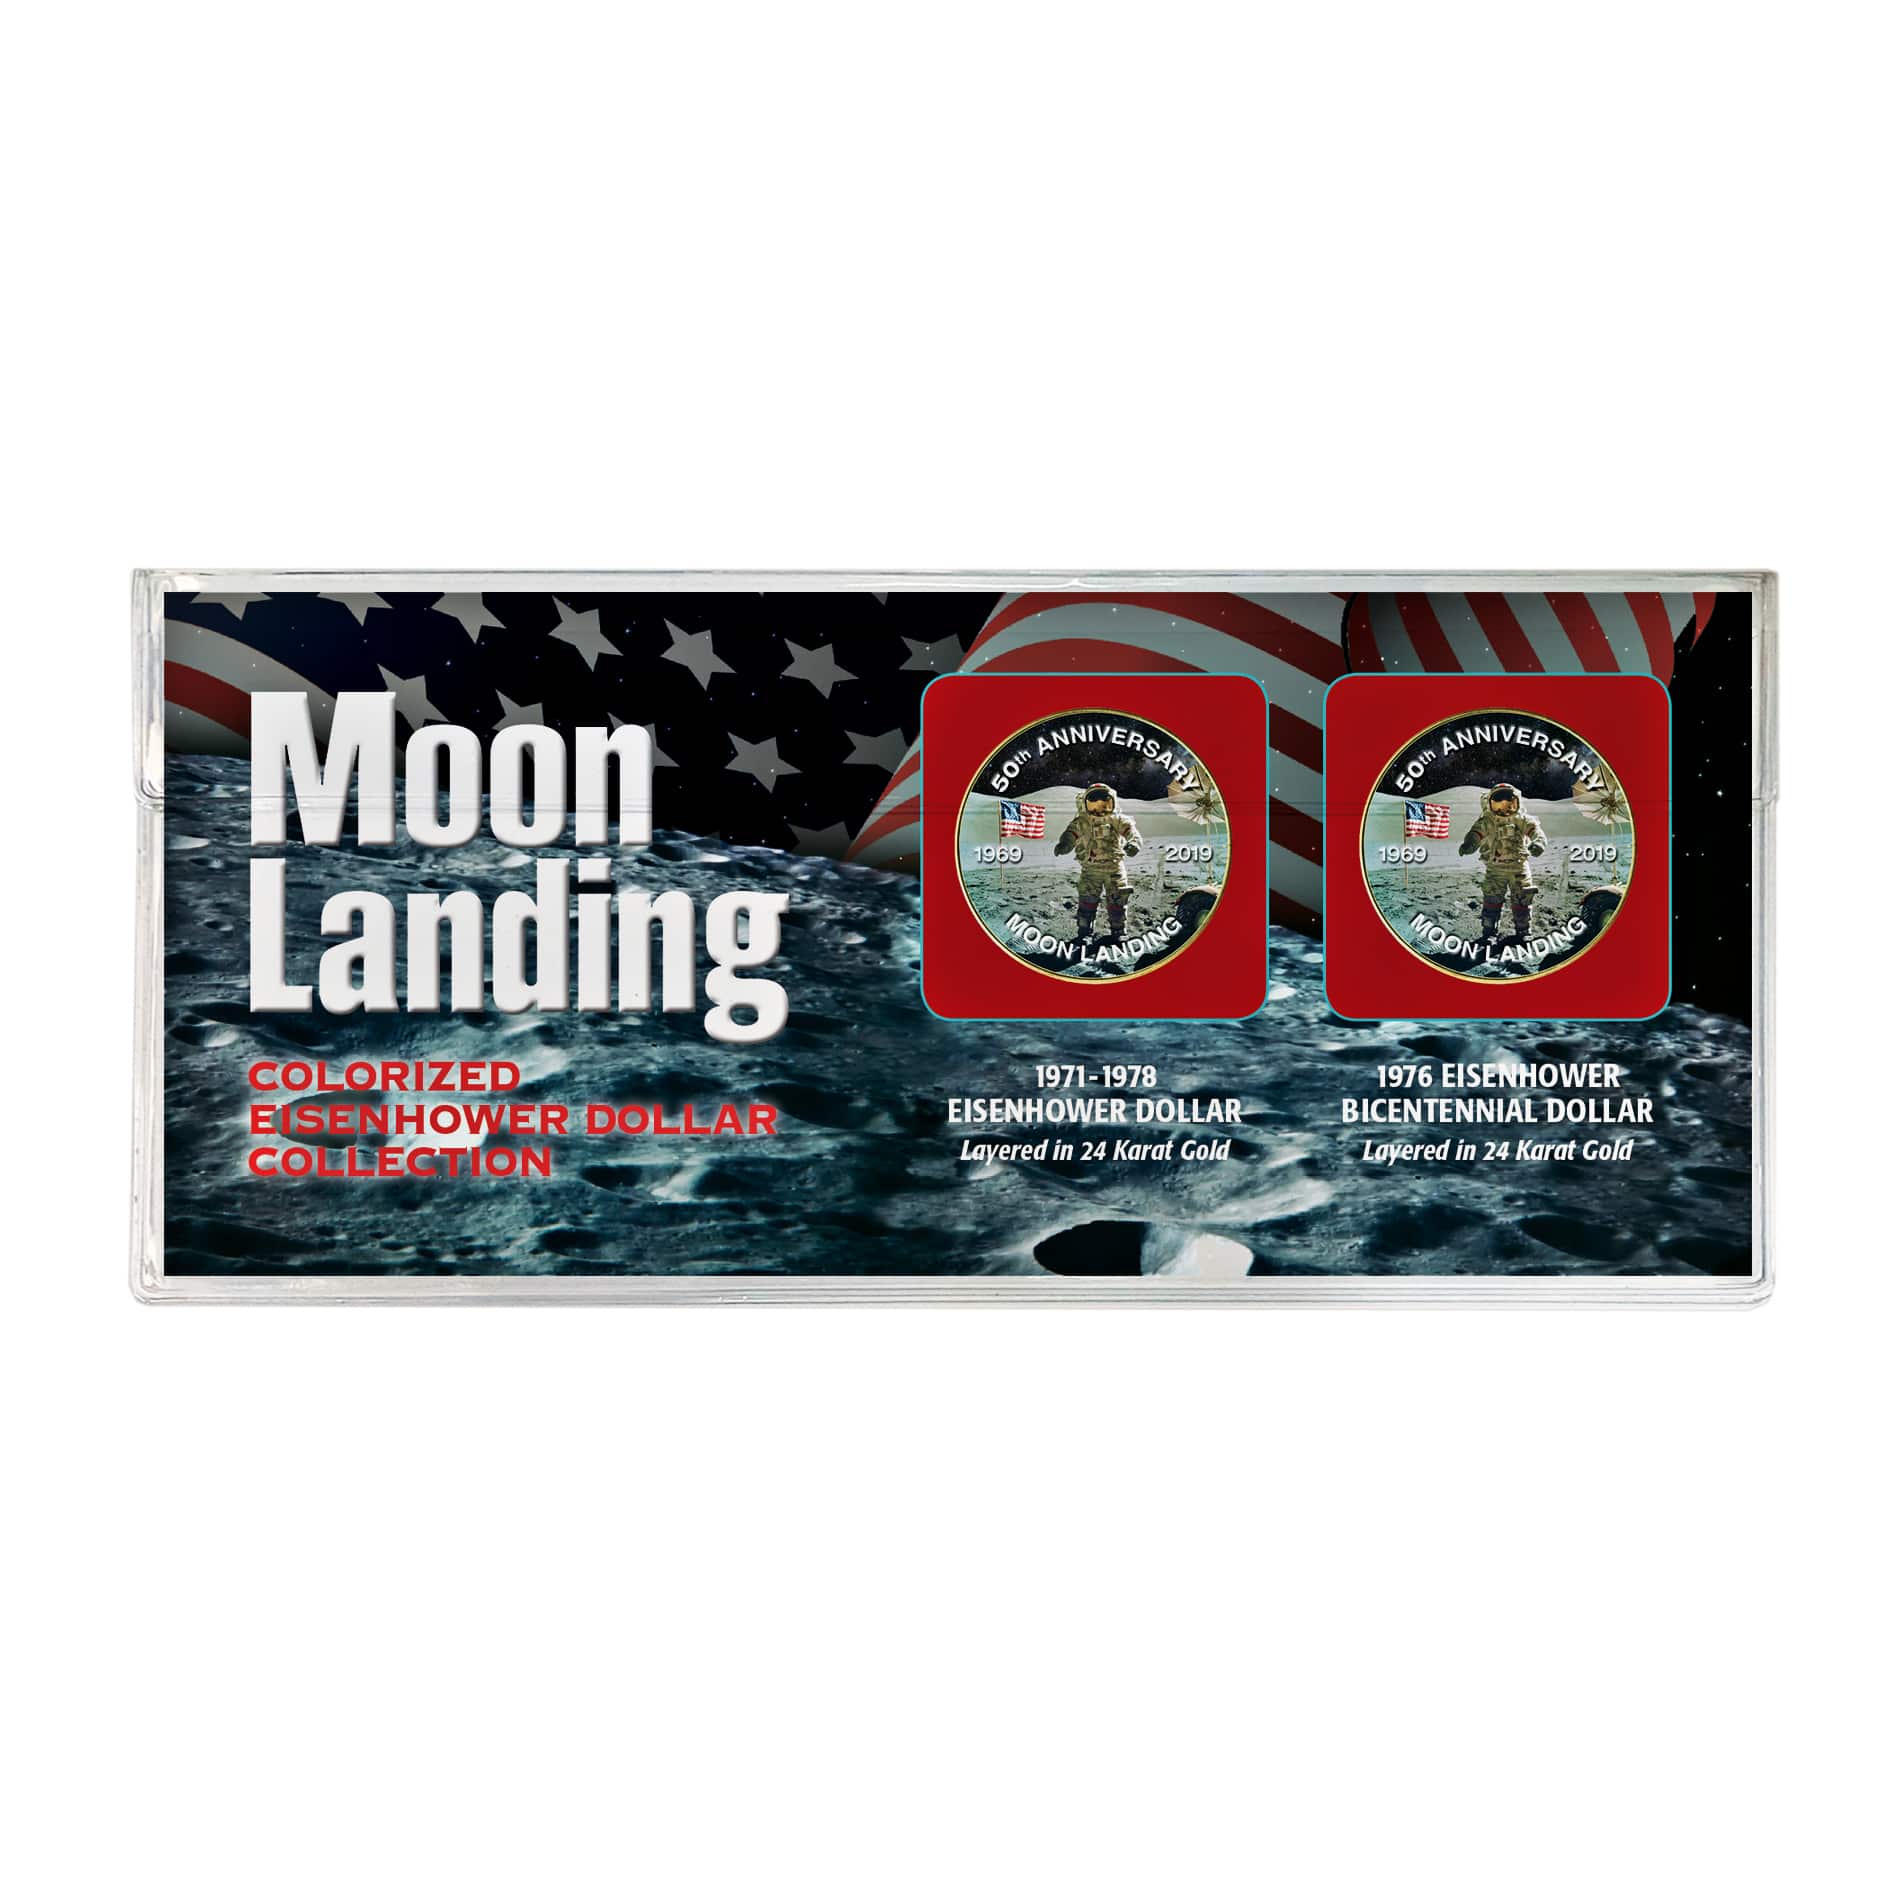 Moon Landing Eisenhower Colorized Eisenhower and Bicentennial